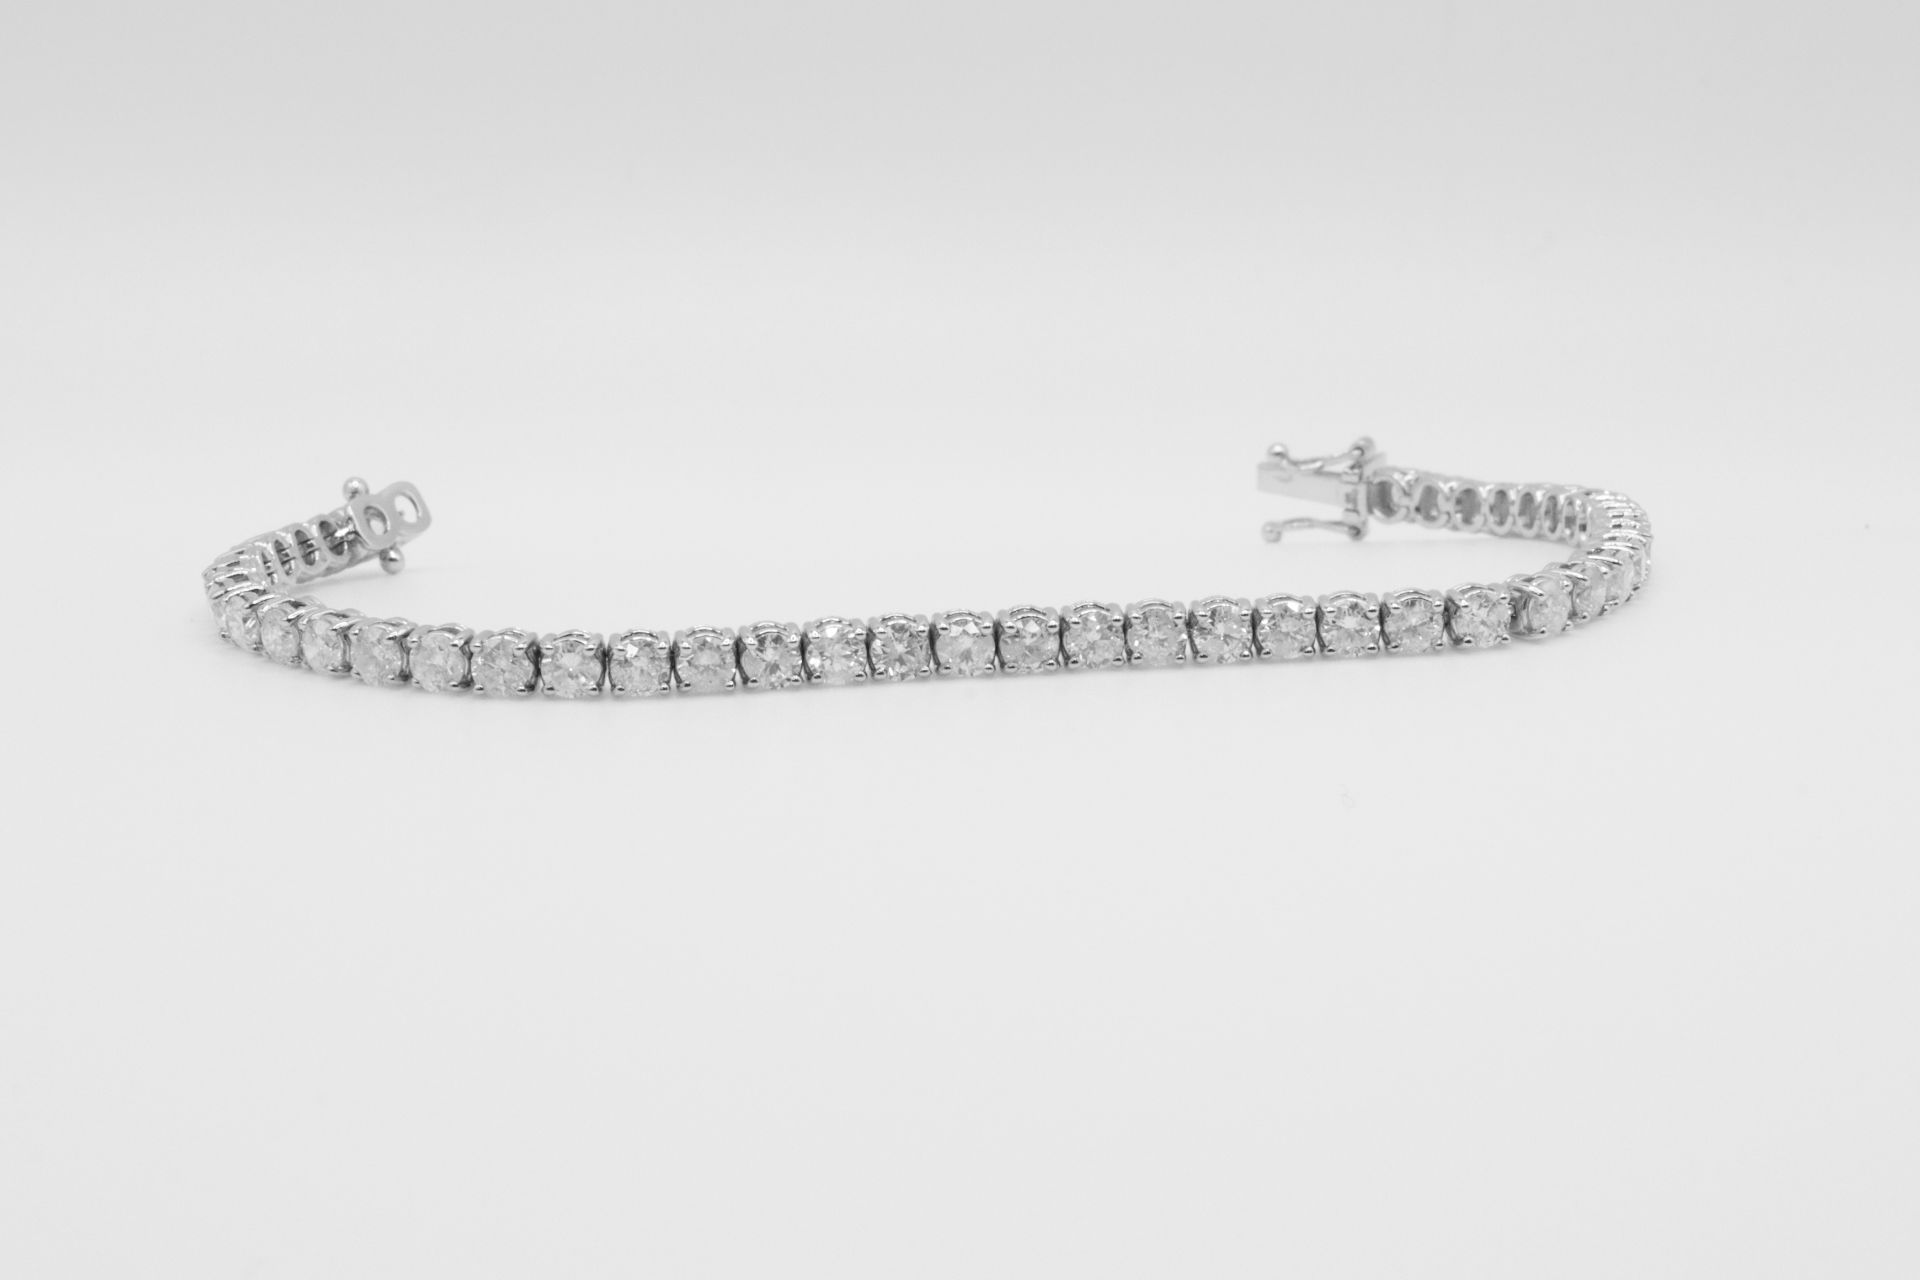 9.0 Carat 18ct White Gold Tennis Bracelet set with Round Brilliant Cut Natural Diamonds - Image 15 of 17